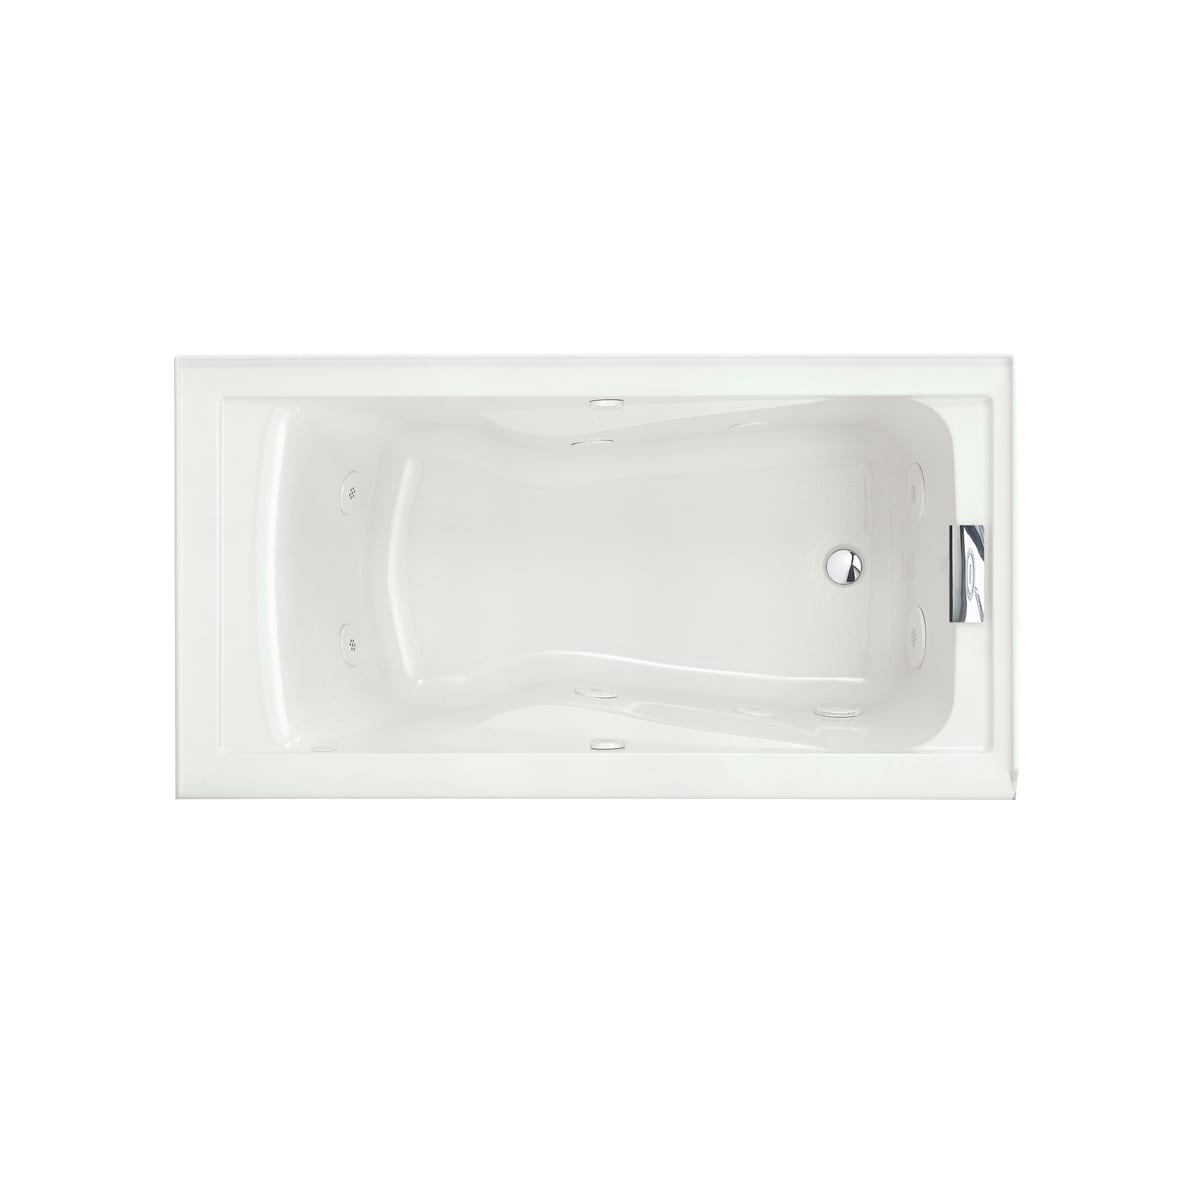 Evolution 60 Acrylic Whirlpool Bathtub, American Standard Whirlpool Bathtub